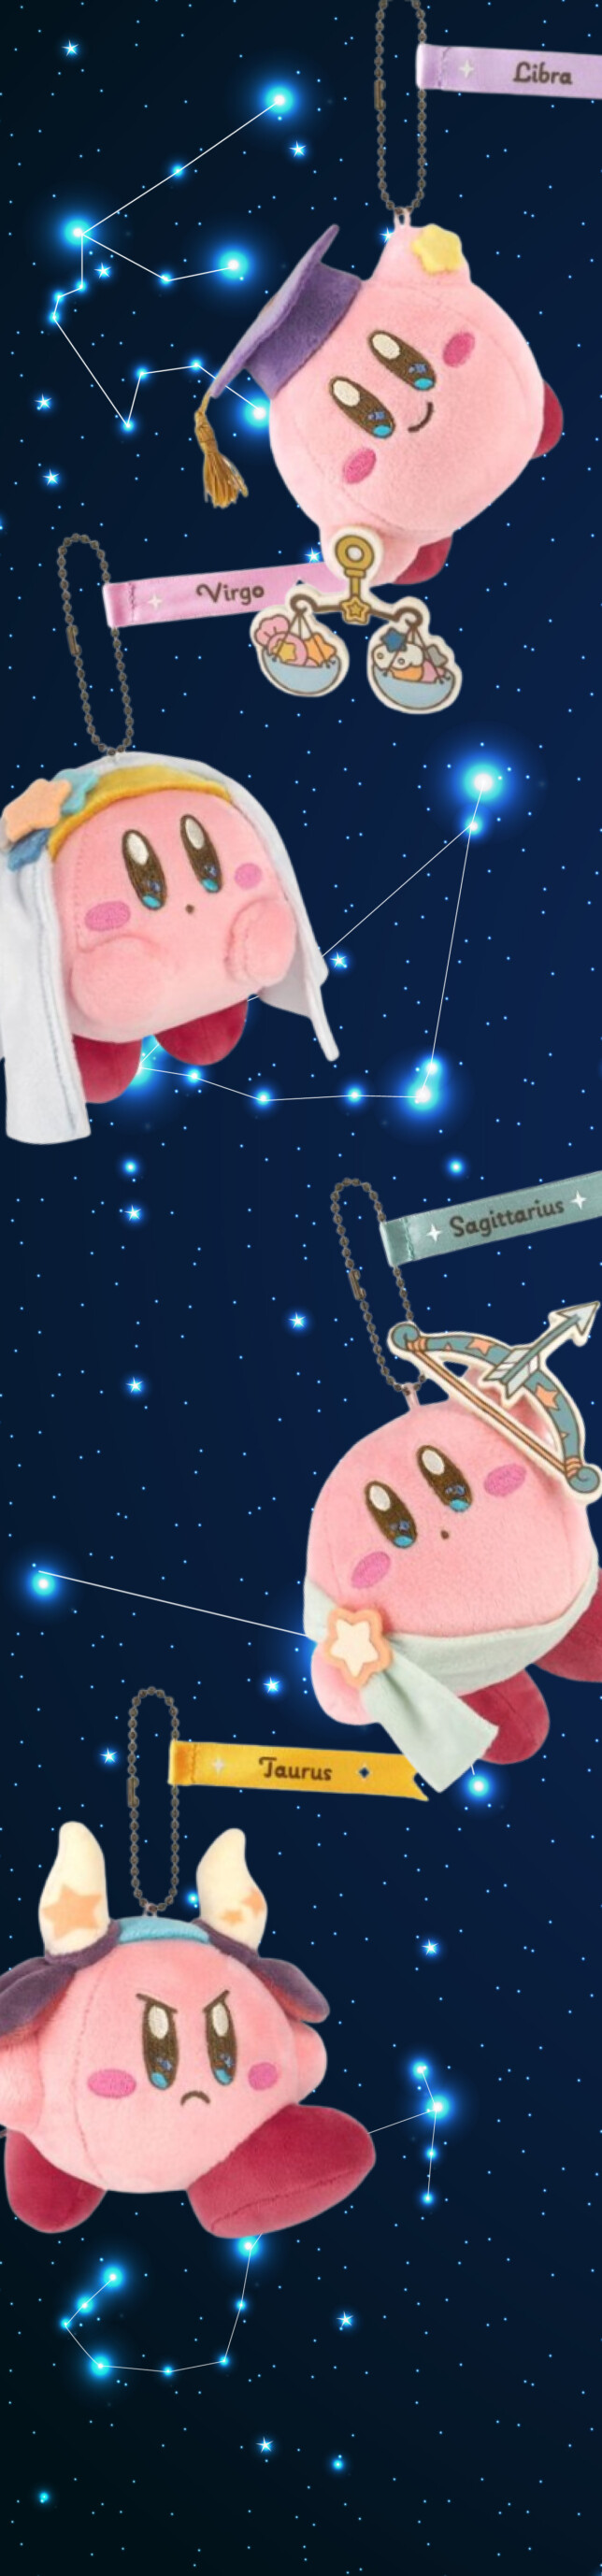 Kirby constellation series